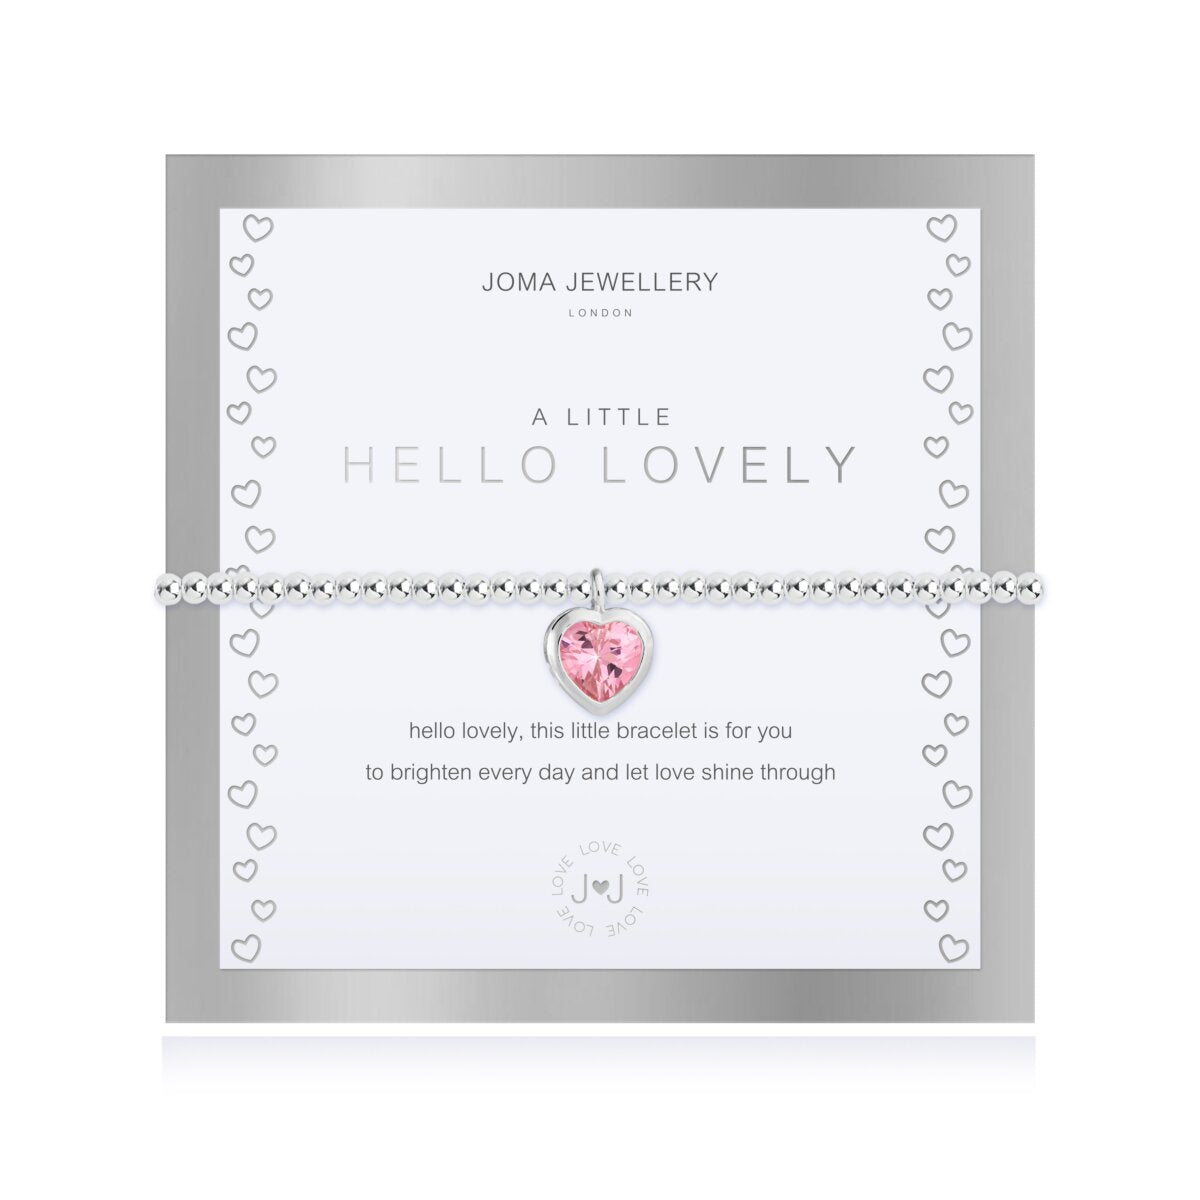 Joma Jewellery Boxed a little Hello Lovely Bracelet